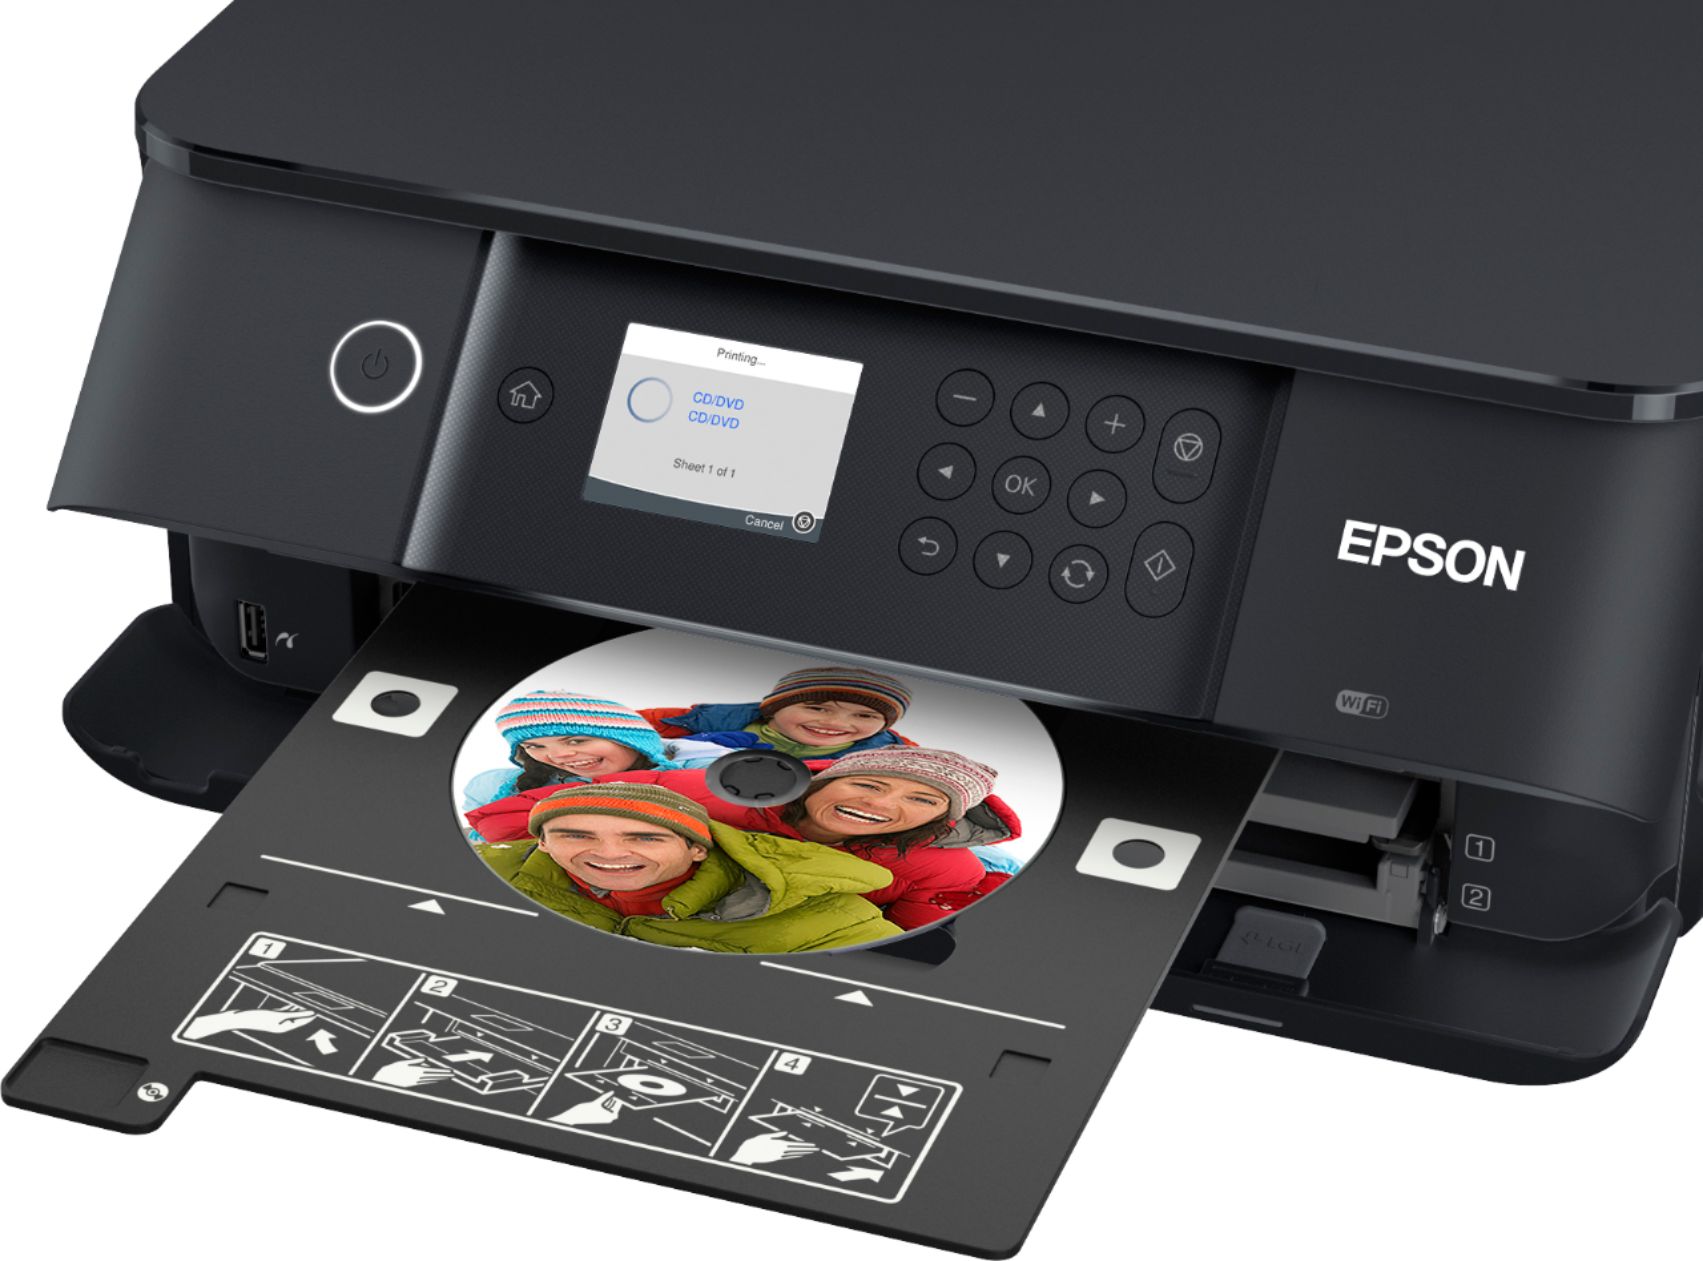 Epson Expression Premium XP-6100 Wireless All-In-One Printer Black EPSON XP-6100 C11CG29201 - Best Buy